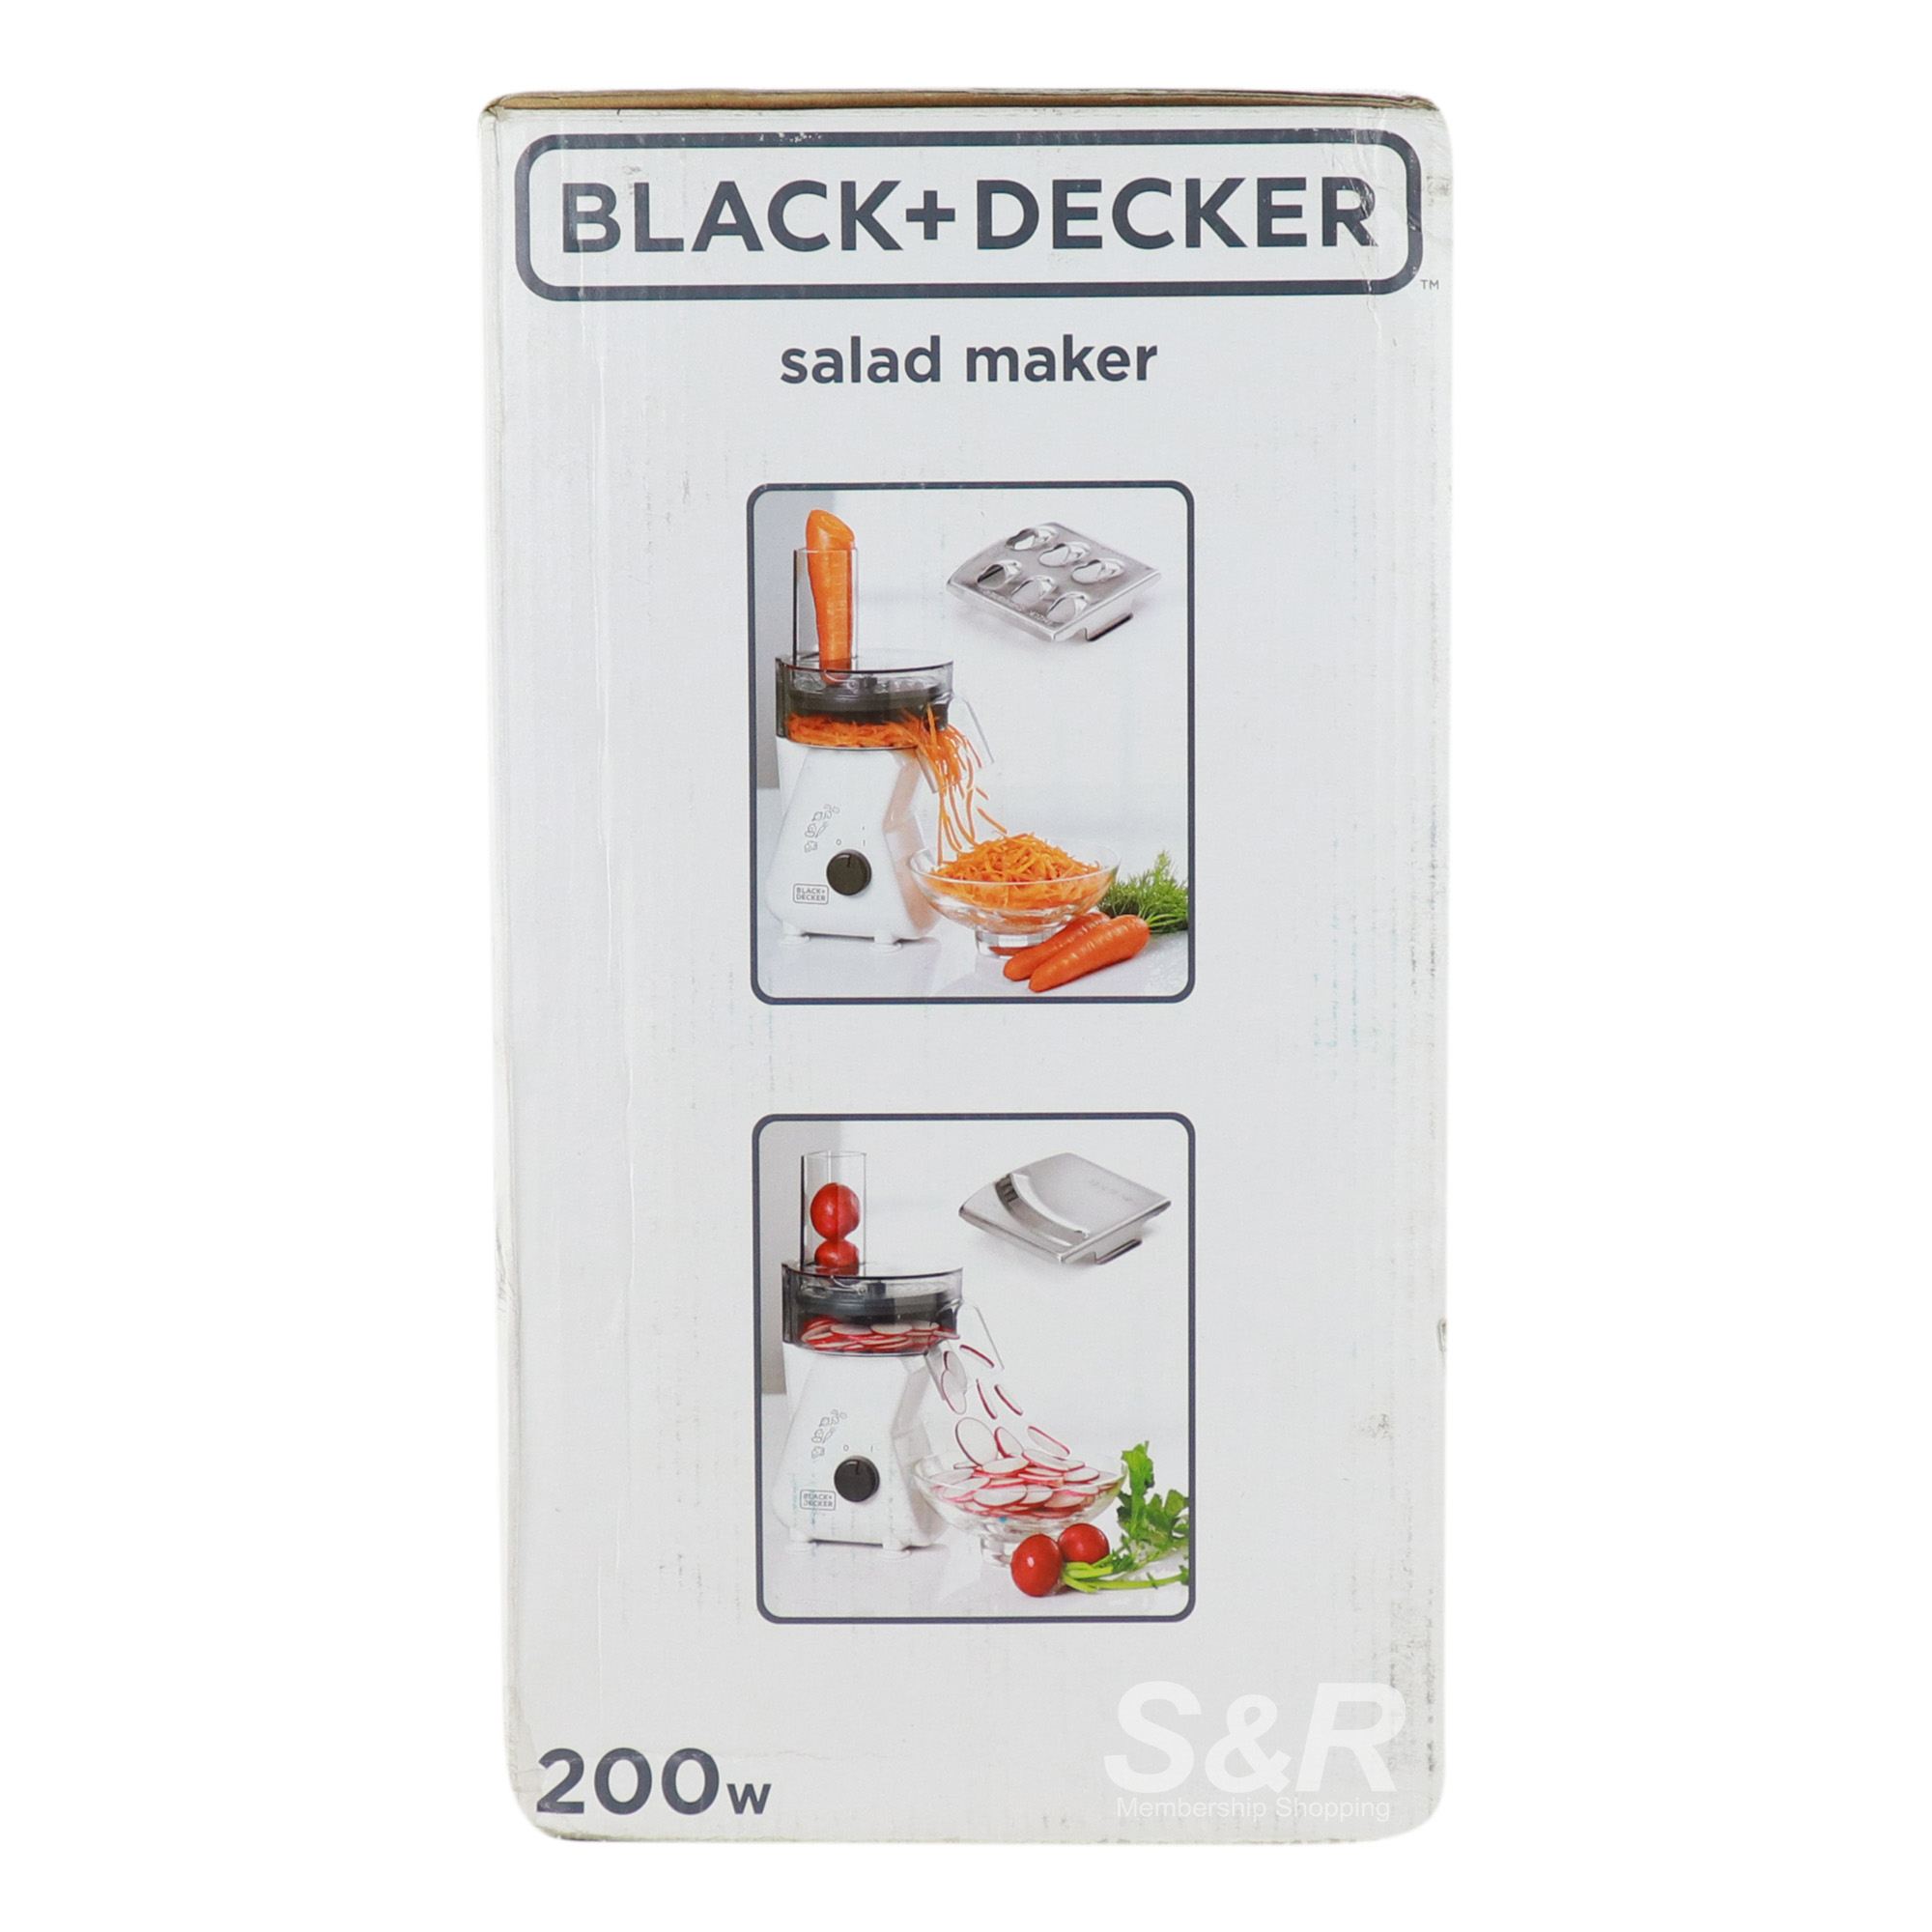 Black & Decker SM250 220-240 Volt Salad Maker Non-usa Compliant